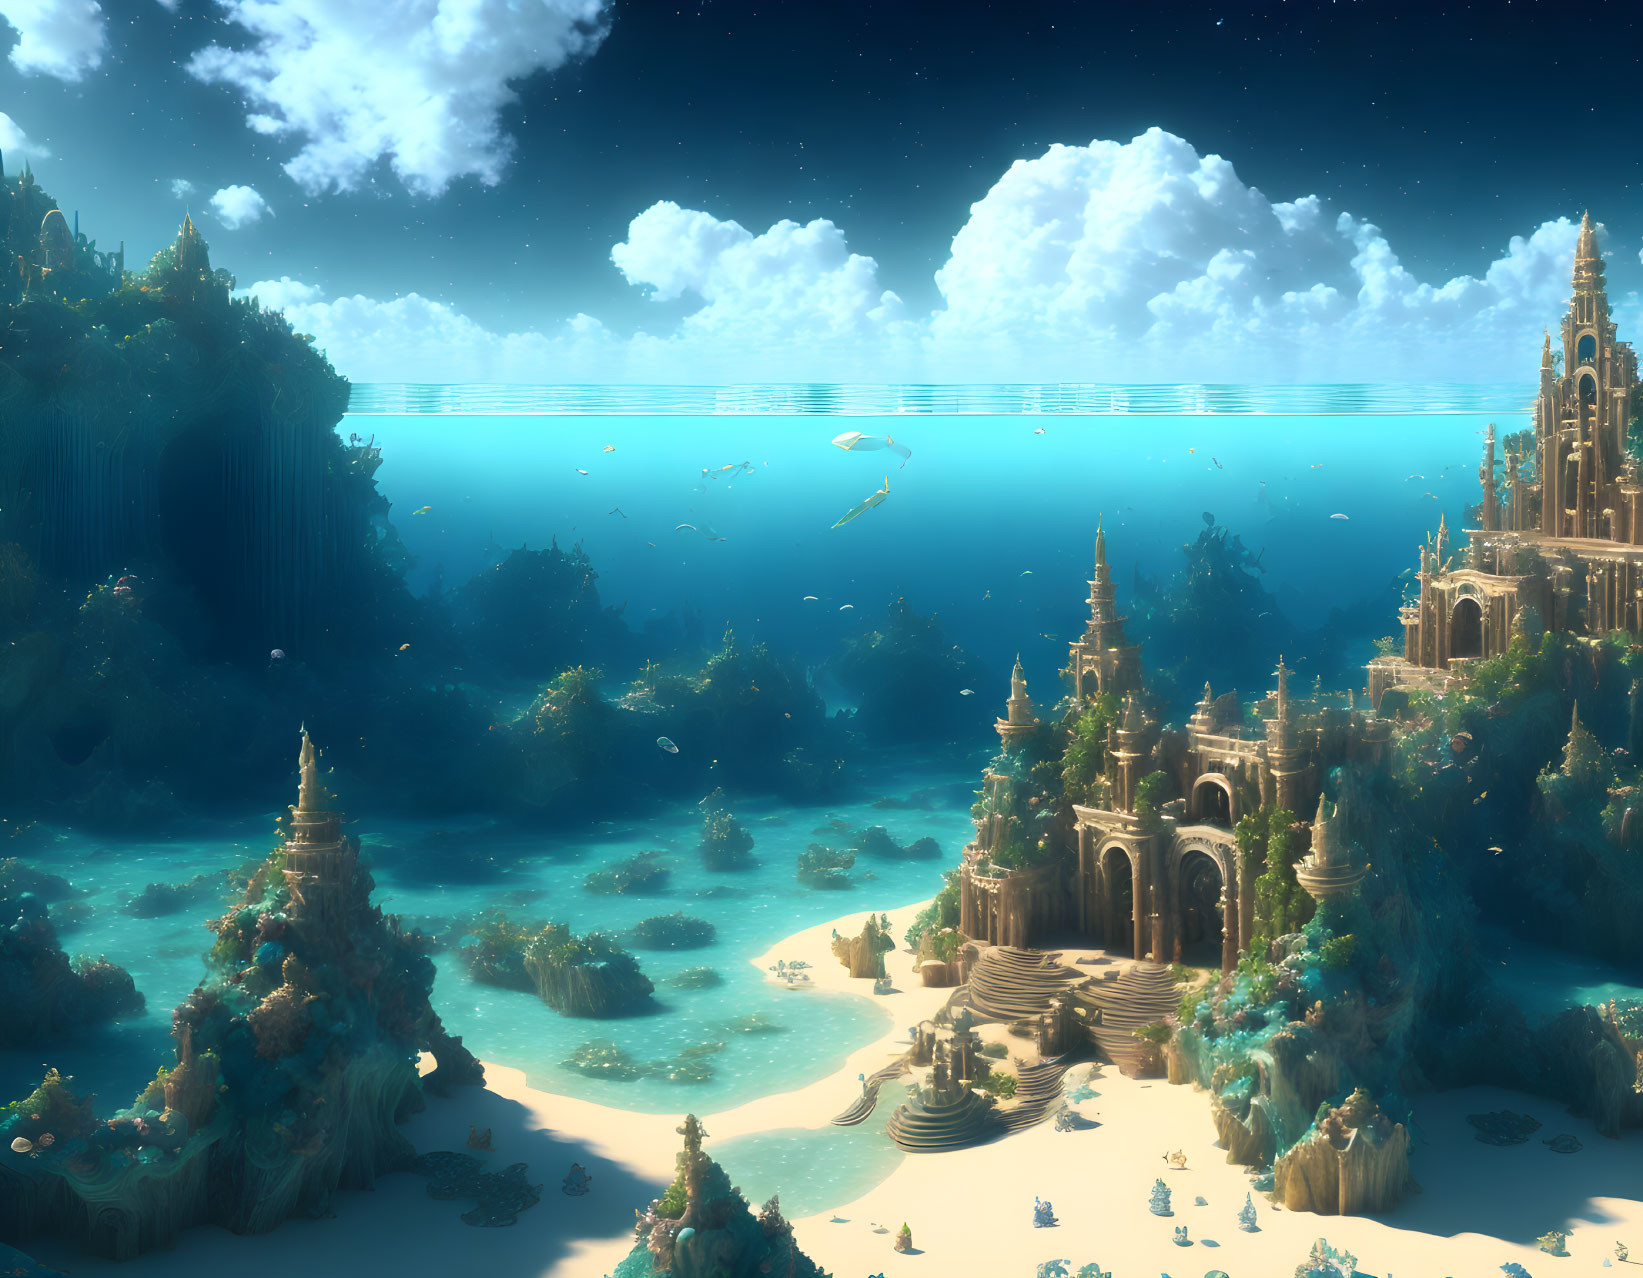 Futuristic underwater cityscape with coral, fish, and bright skyline